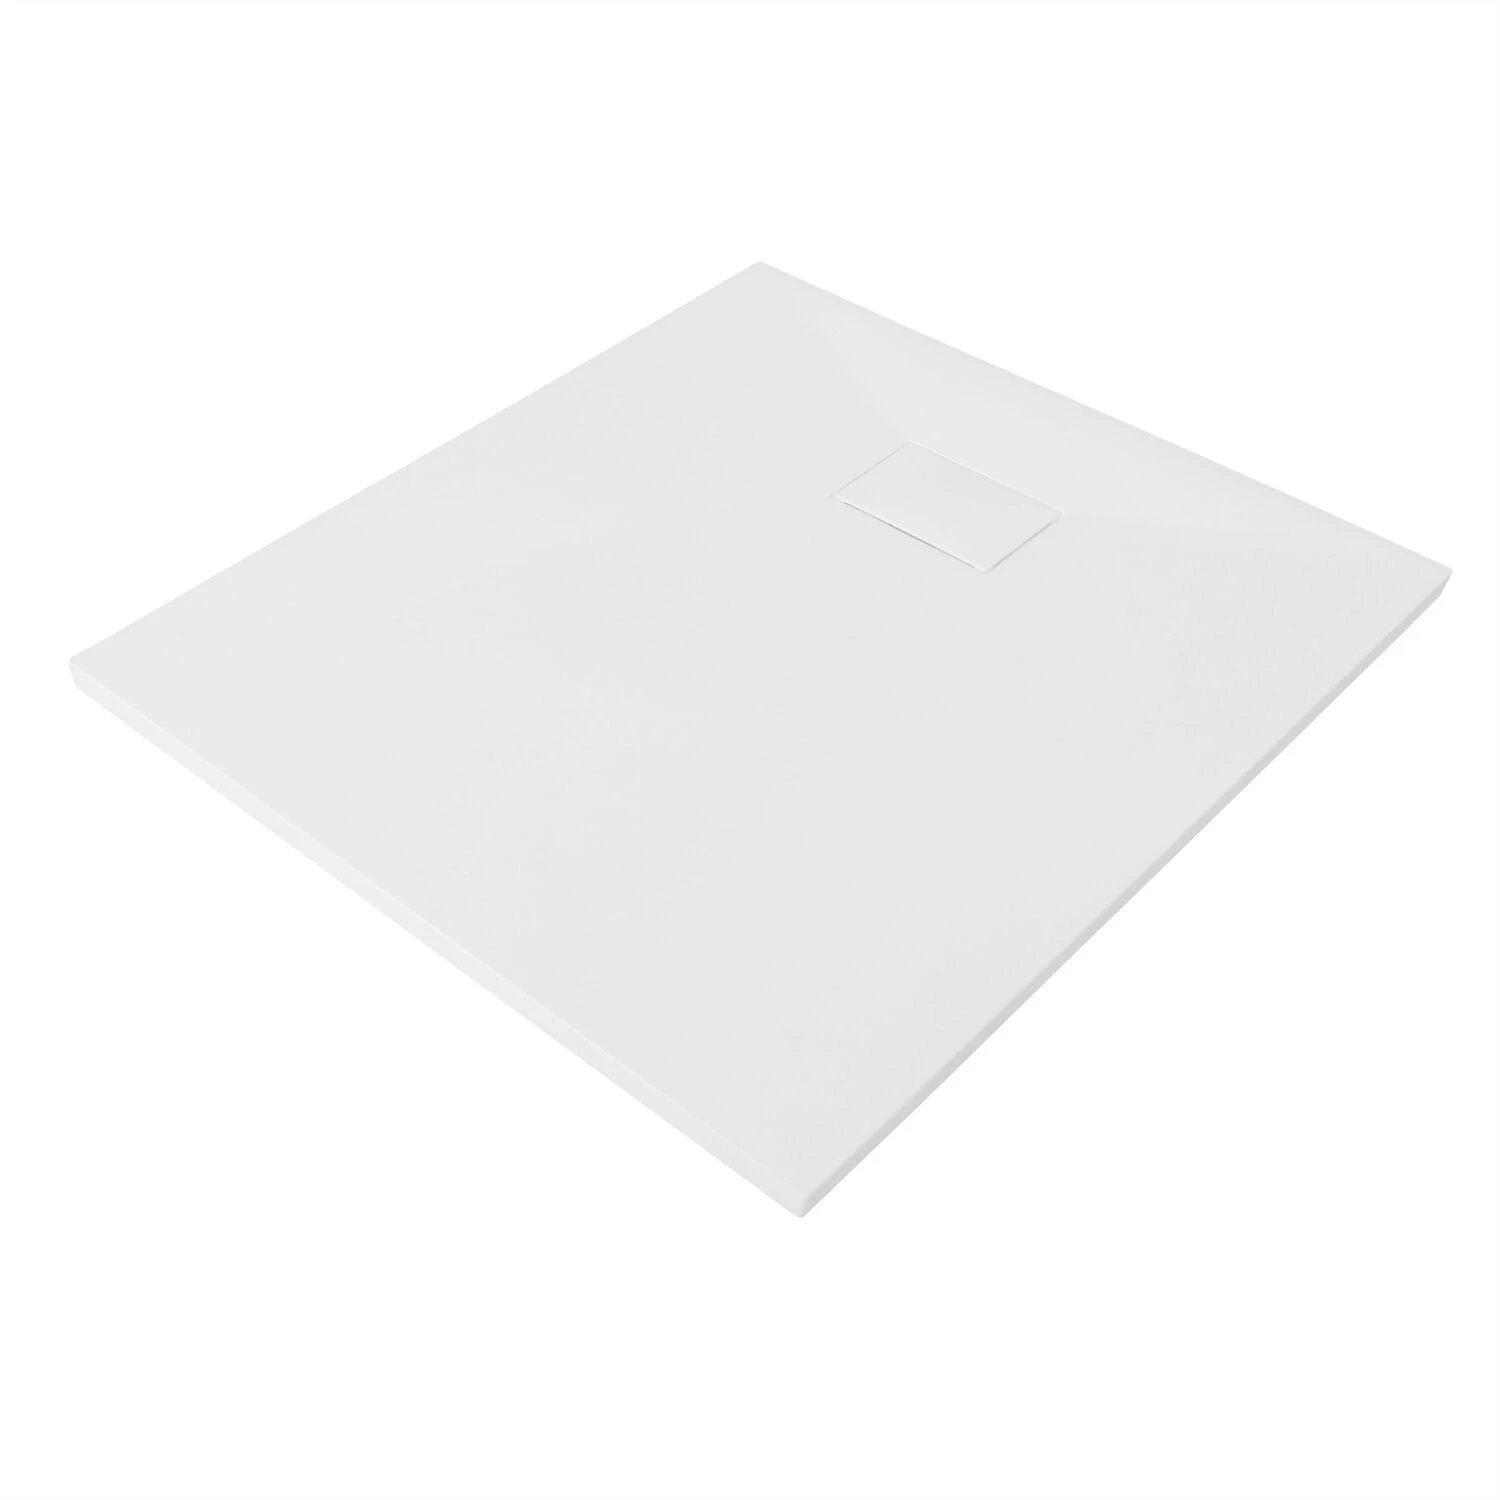 Поддон для душа WasserKRAFT Main 41T02 80x80, стеклопластик (SMC), цвет белый